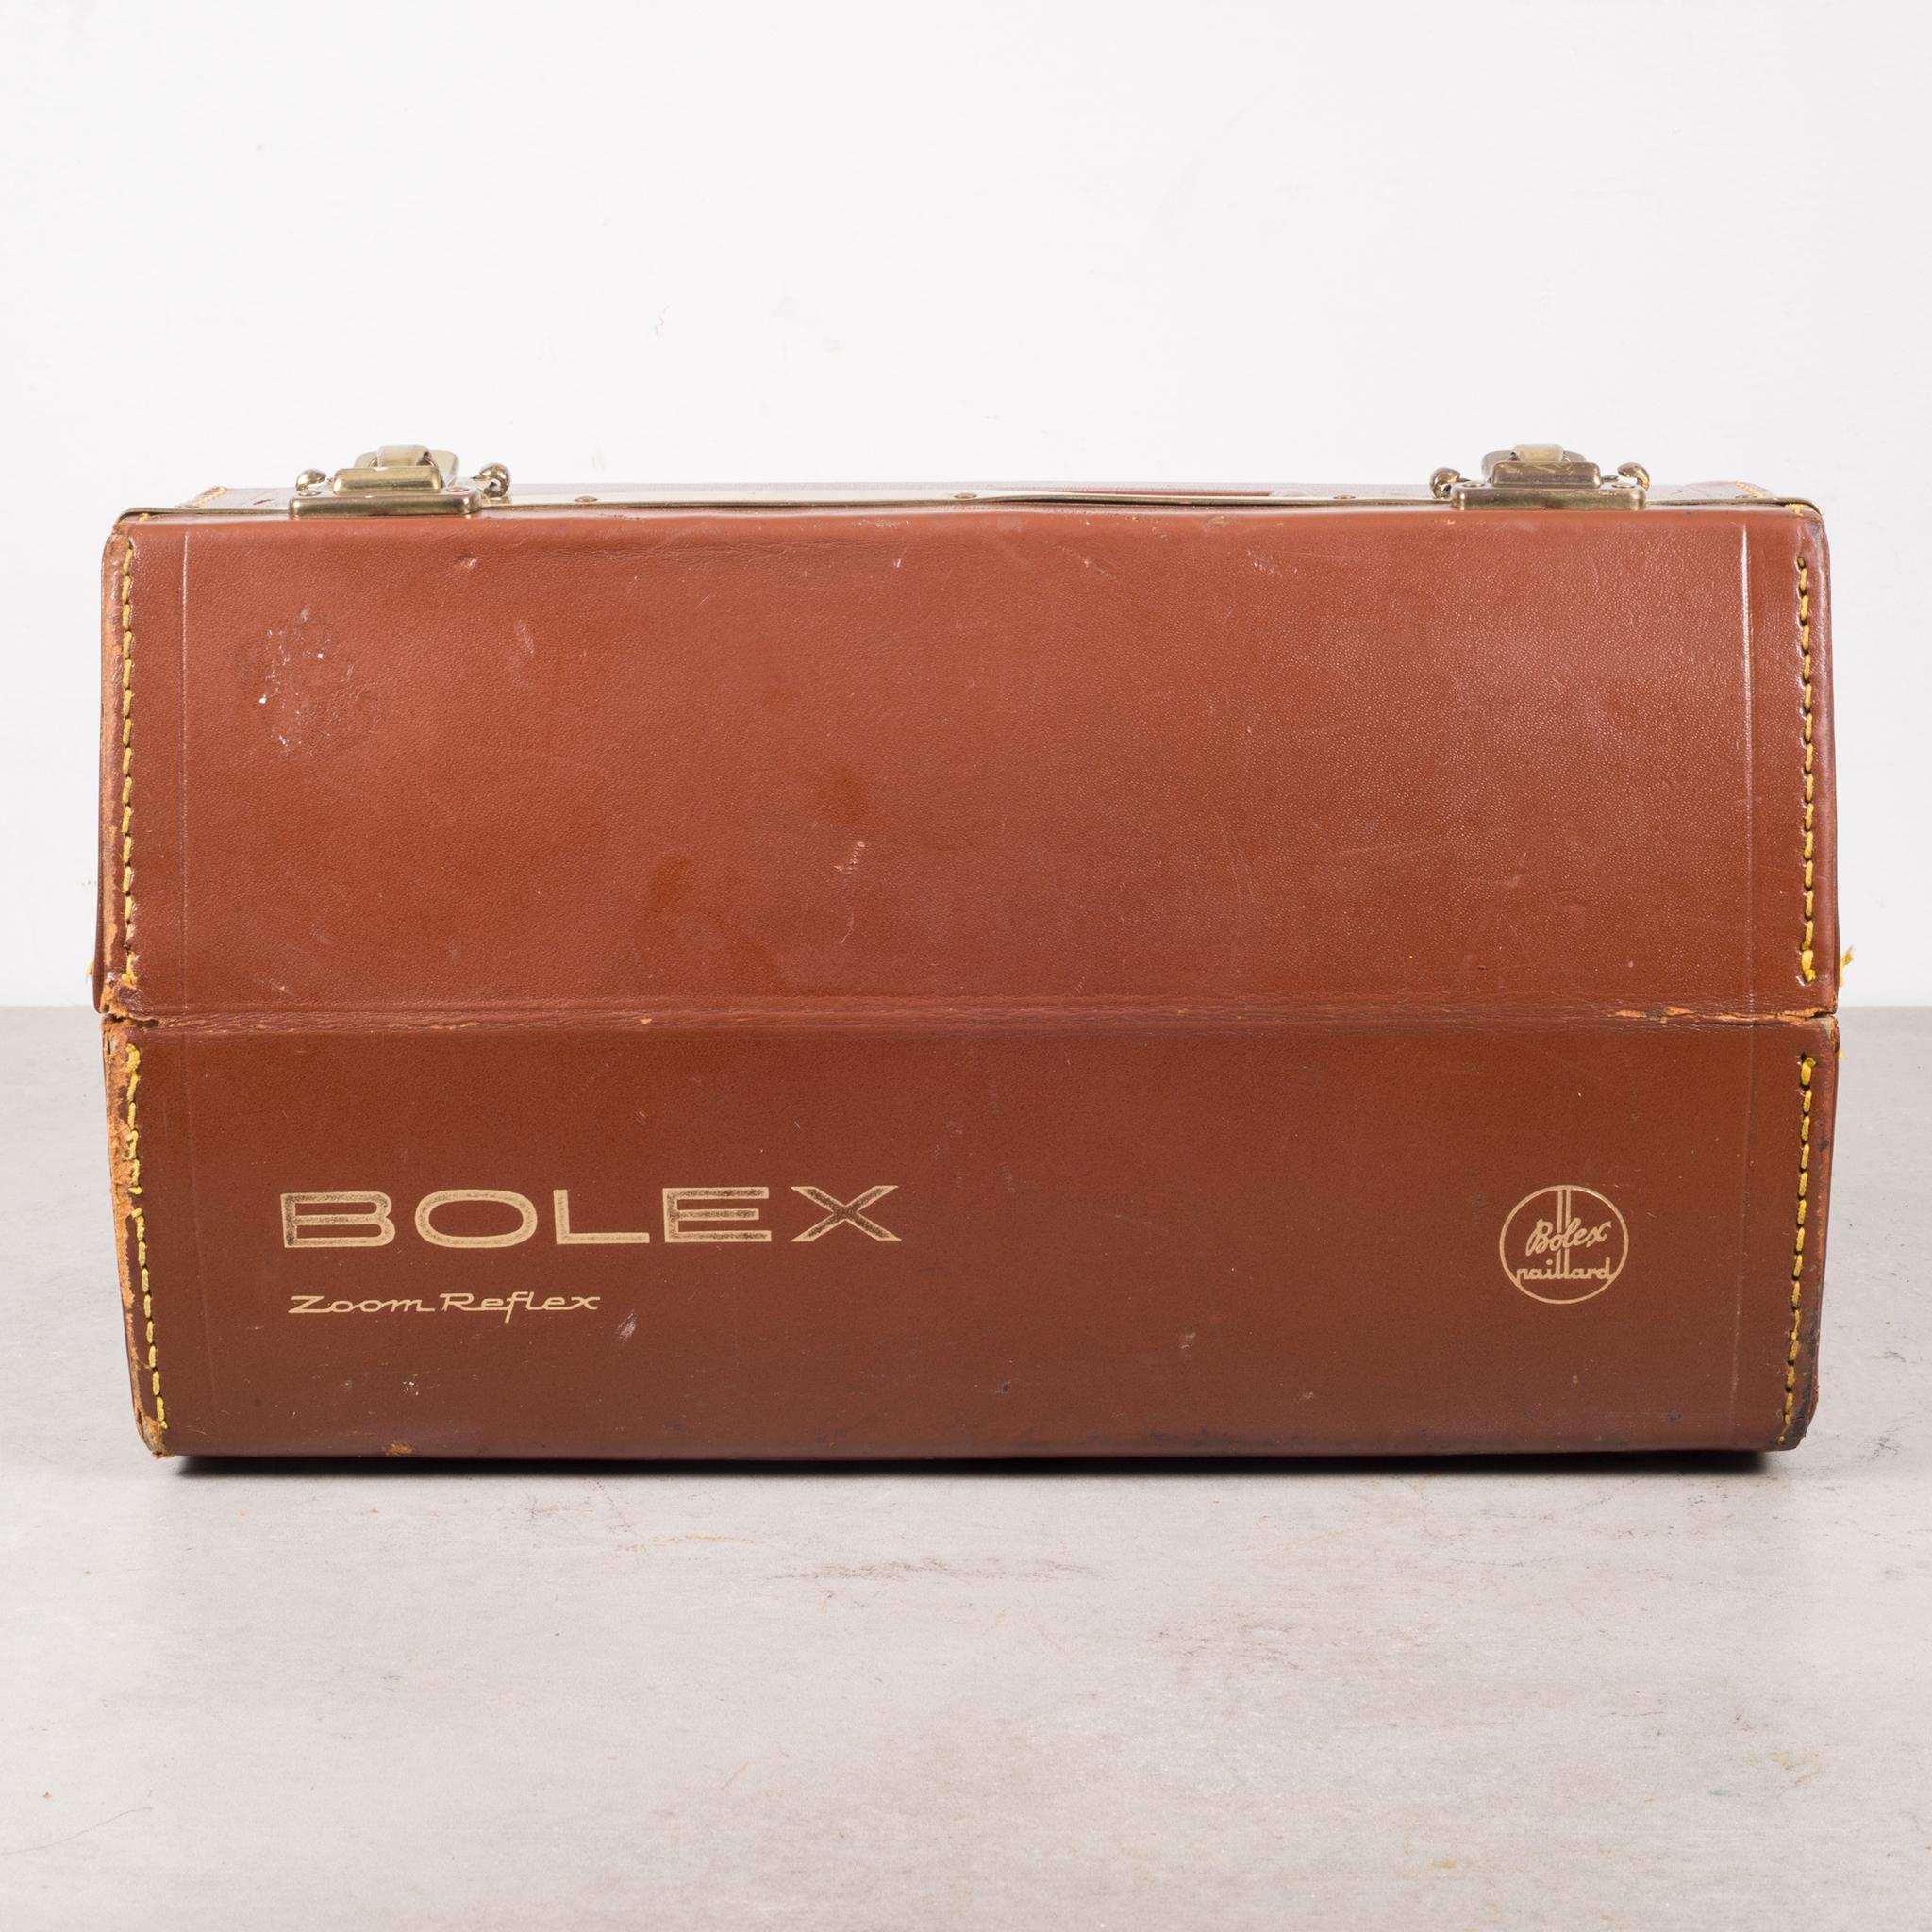 Brass Bolex Zoom Reflex P1 Movie Camera and Leather Case, circa 1961